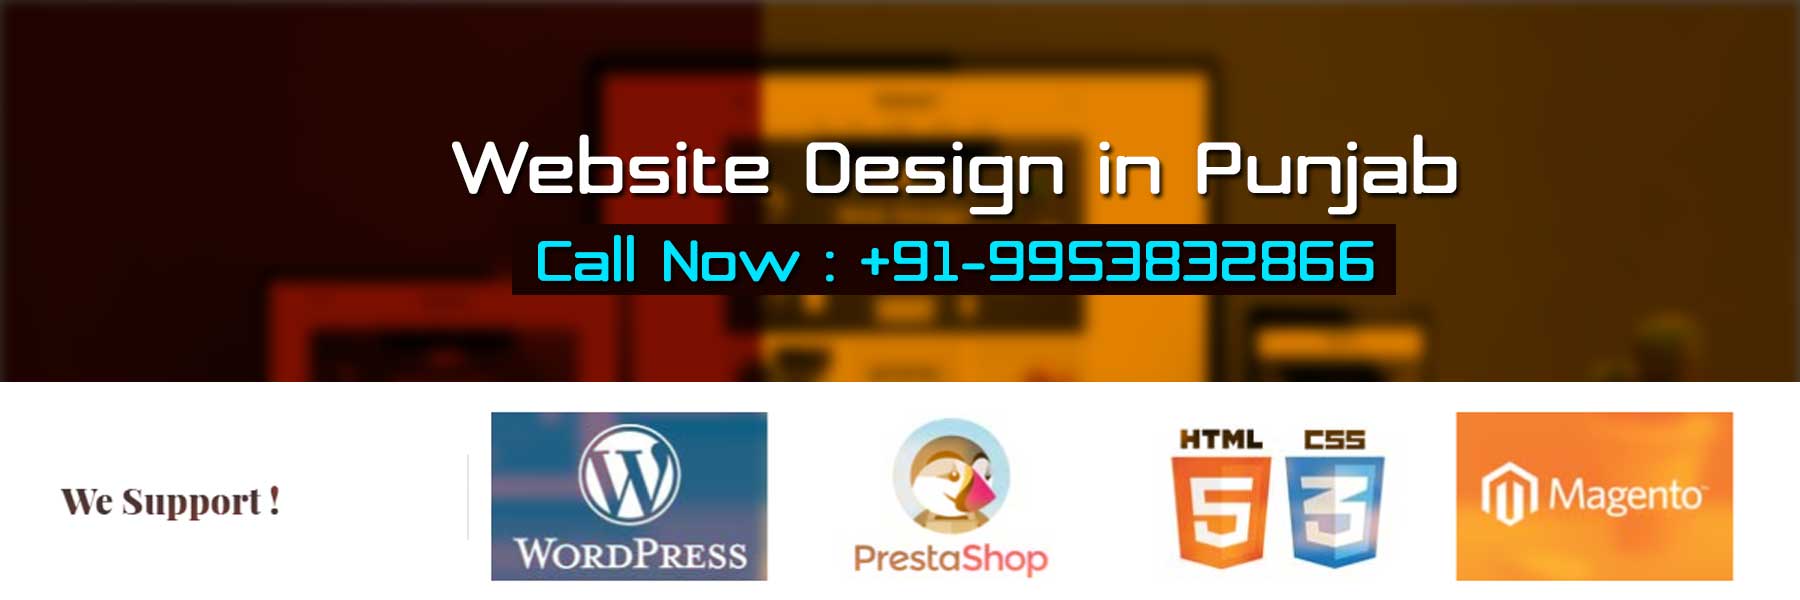 Website Design in Punjab